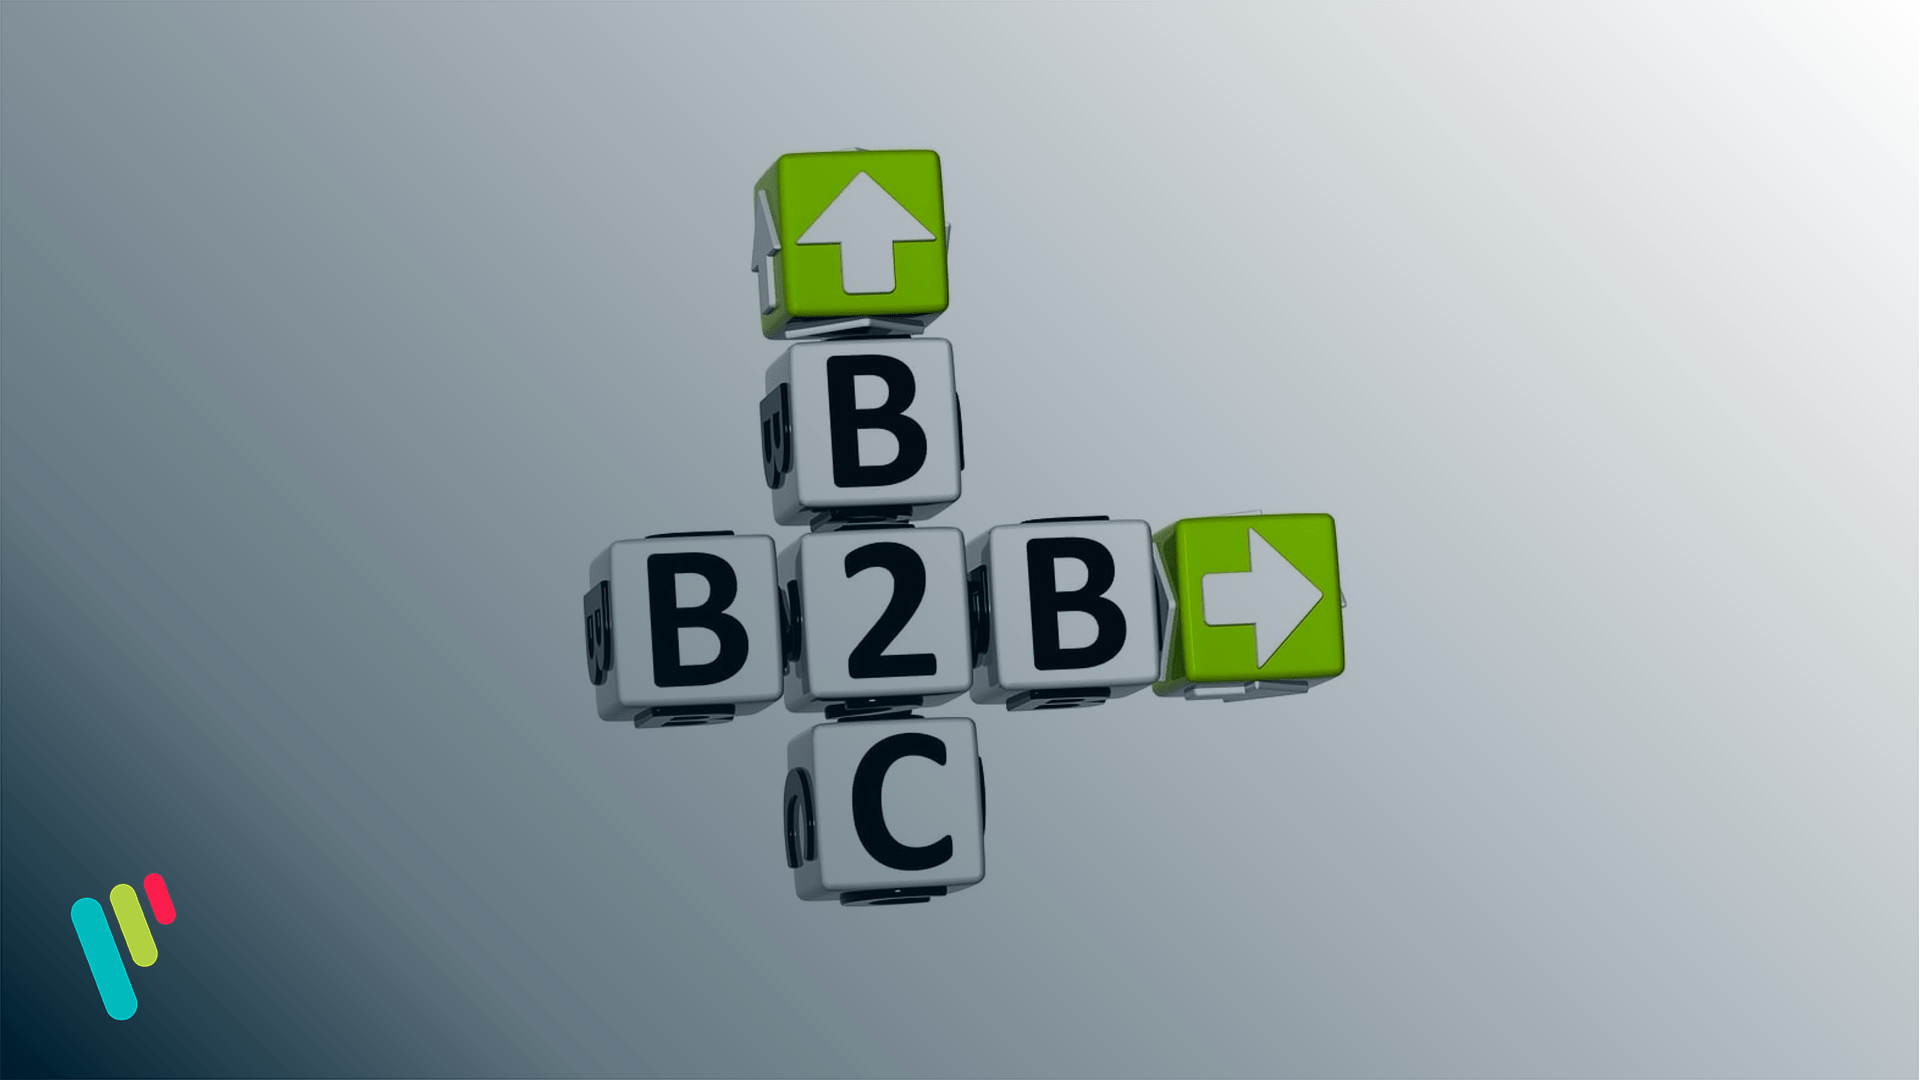 marketing digital est important image de blog marketing b2b vs b2c